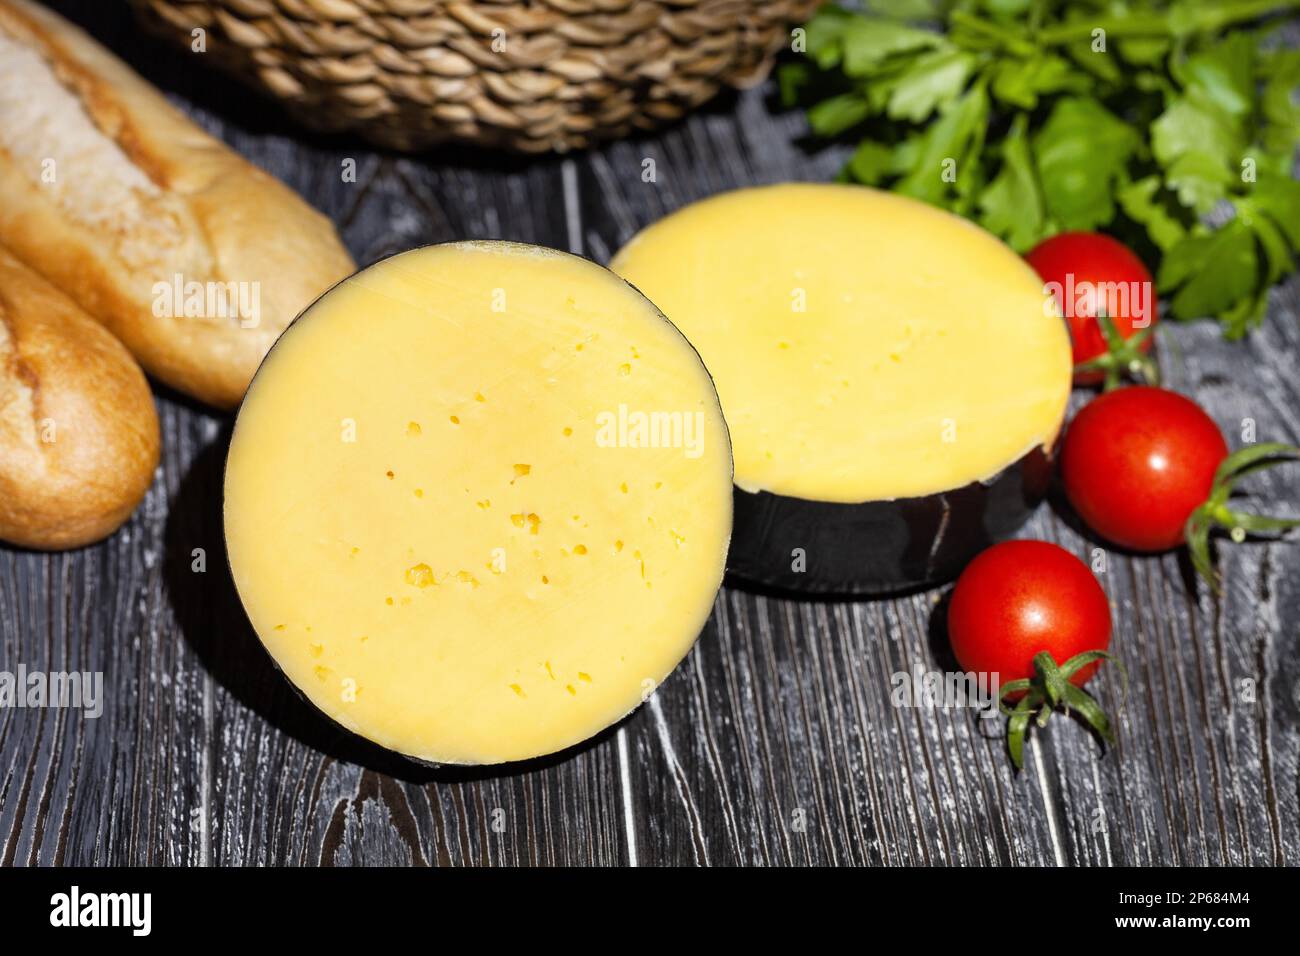 round cheese on wood background Stock Photo